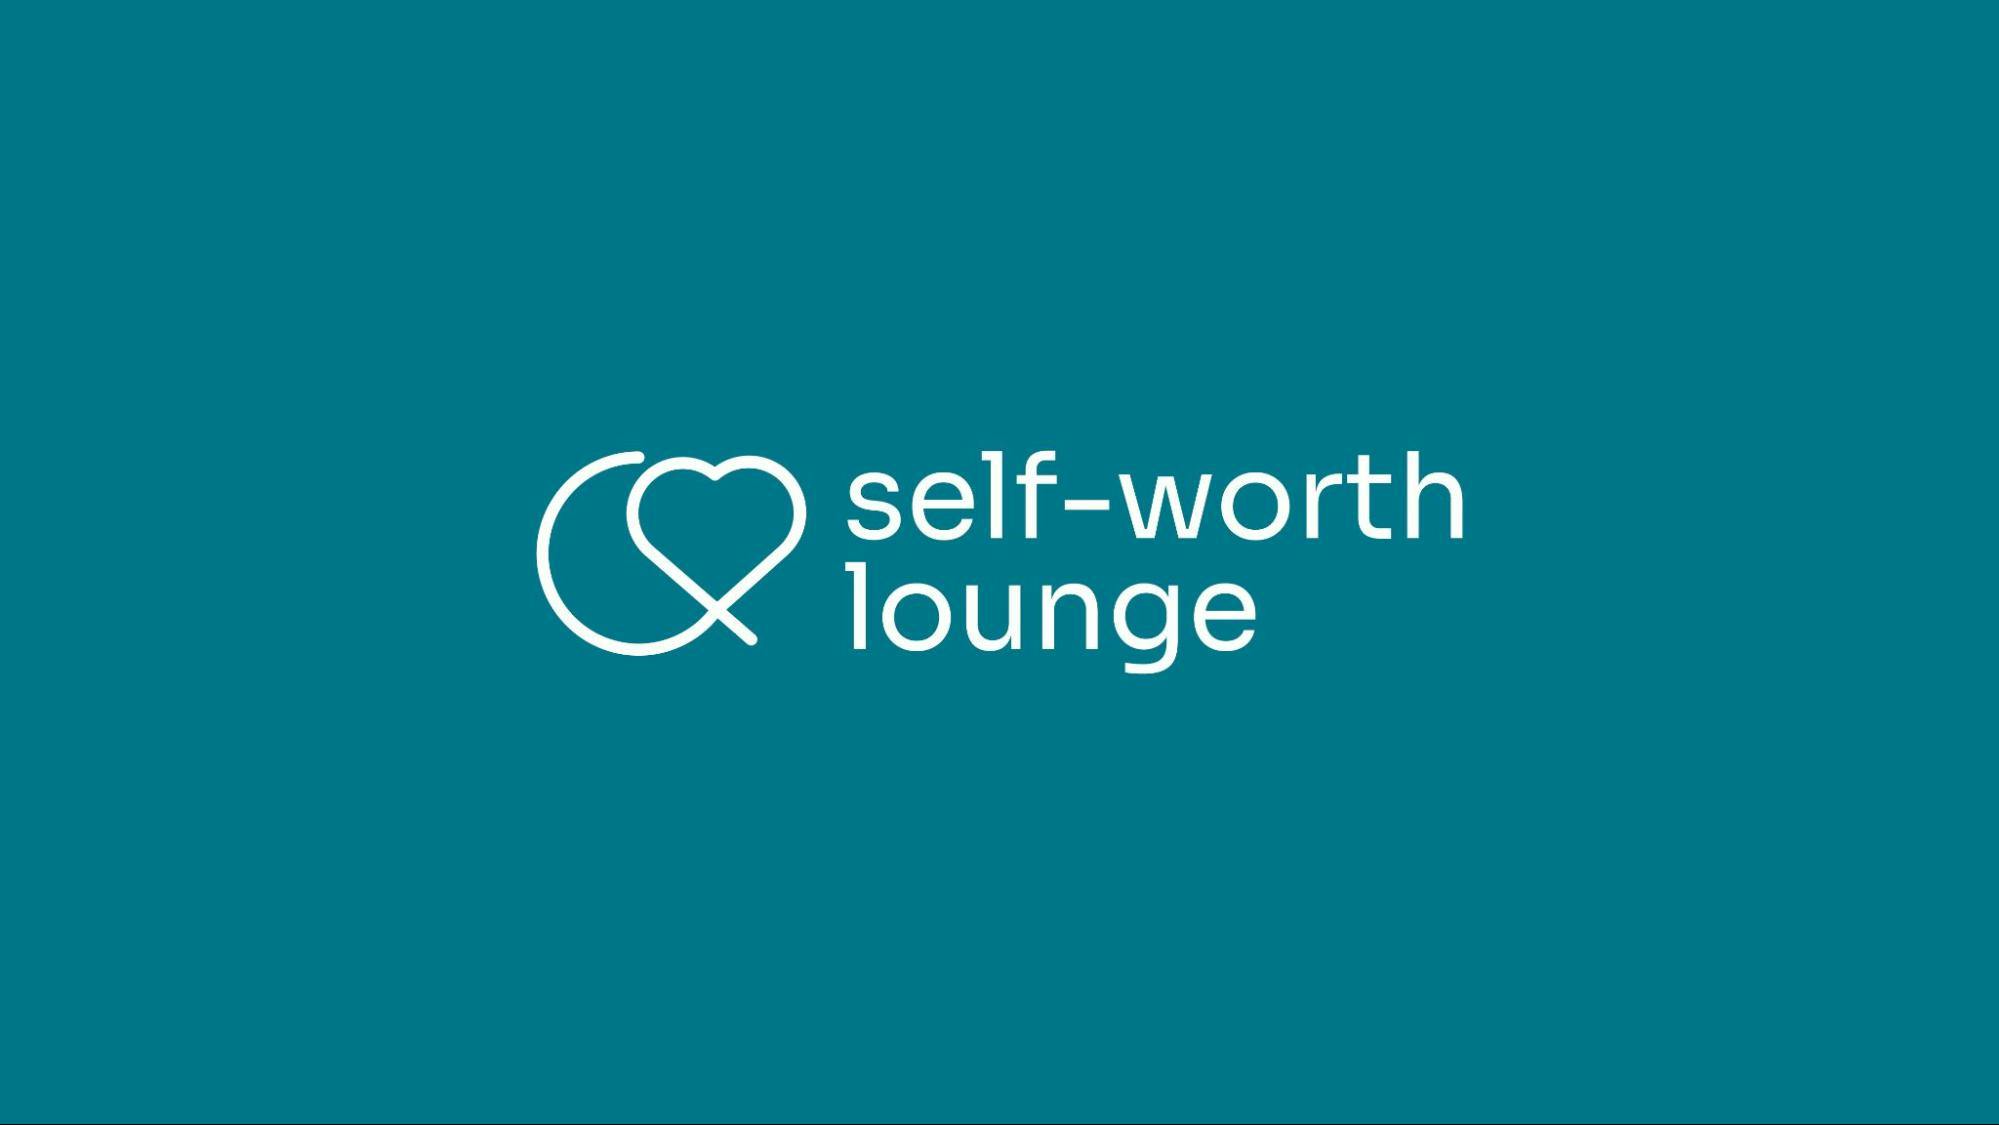 The Self-Worth Lounge logo